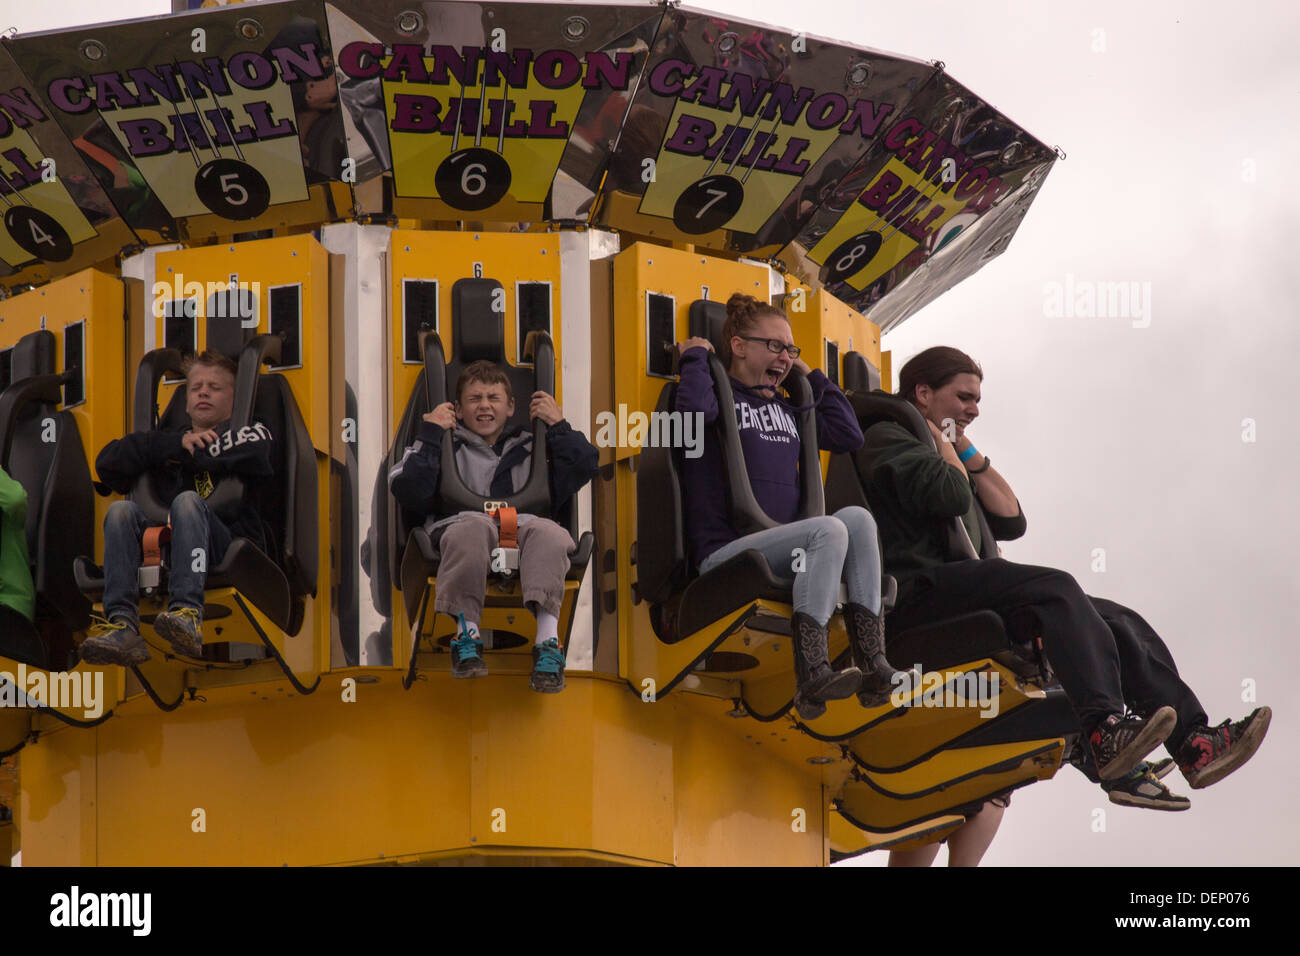 Tower ride at Lindsay Fair and Exhibition in Kawartha Lakes Stock Photo